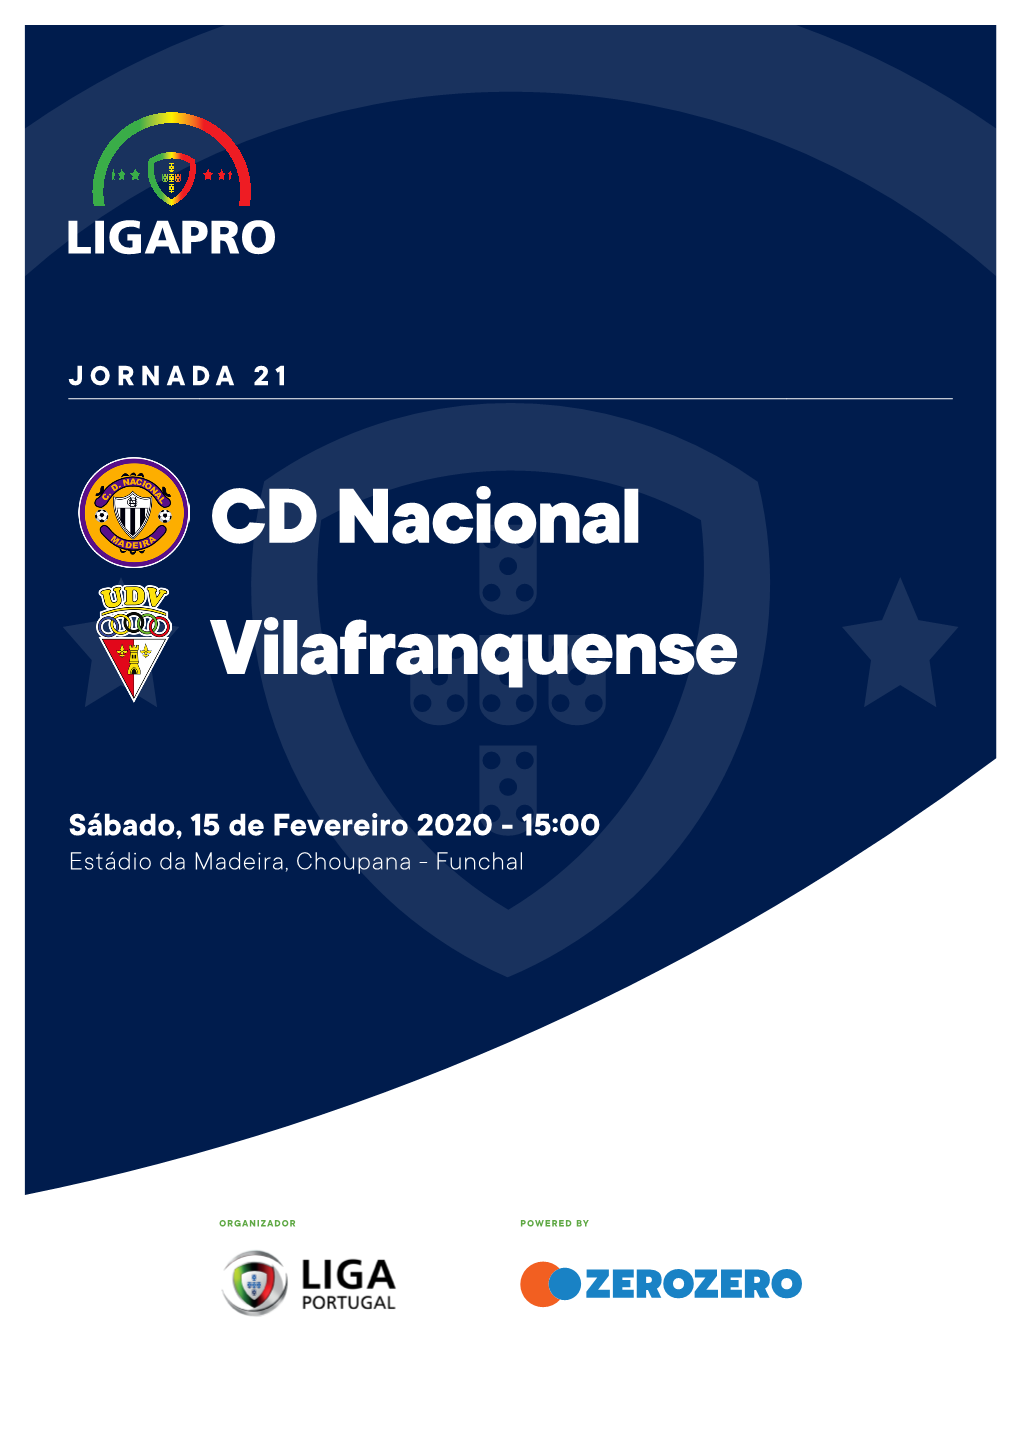 CD Nacional Vilafranquense